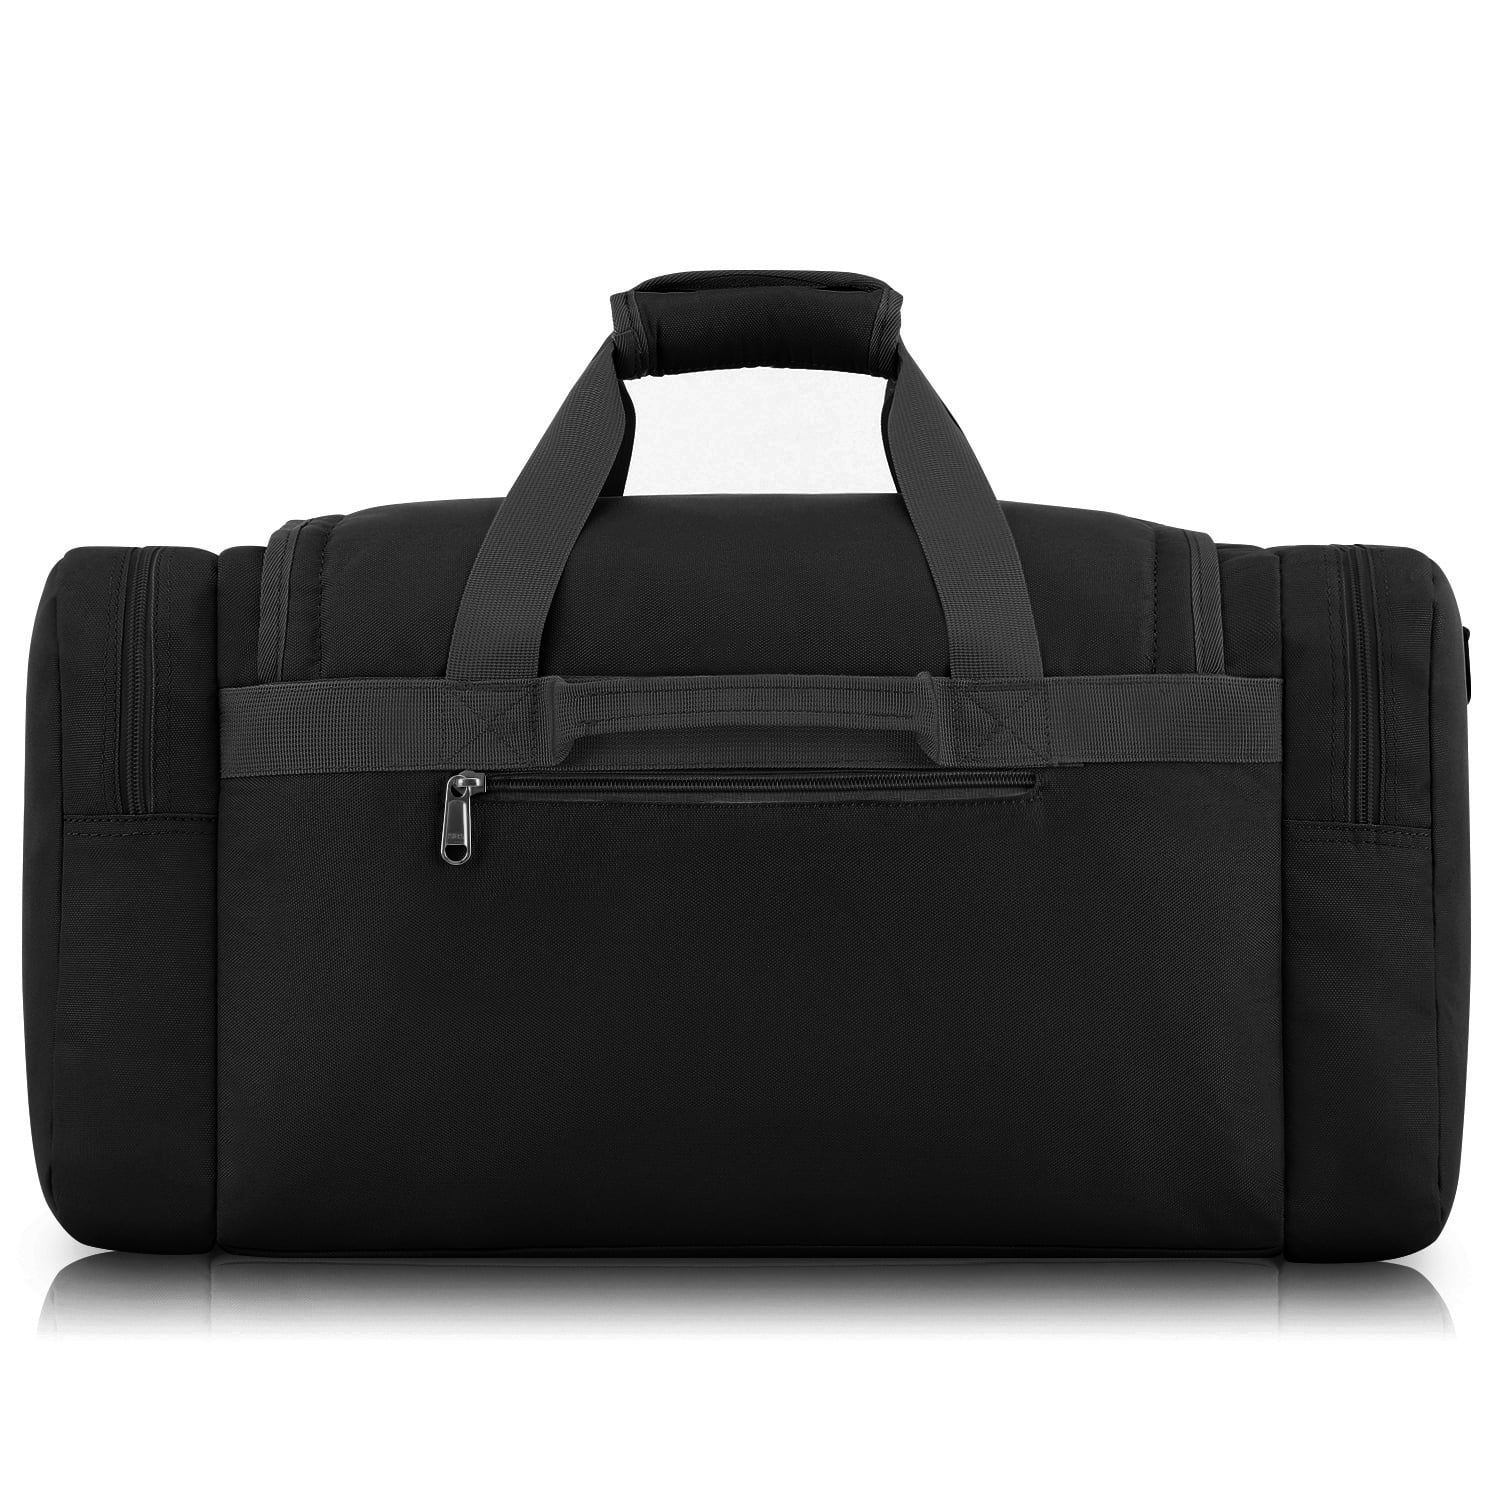 Gonex 45L Travel Duffel, Gym Sports Luggage Bag Water-resistant Many Pockets, Black - Walmart ...